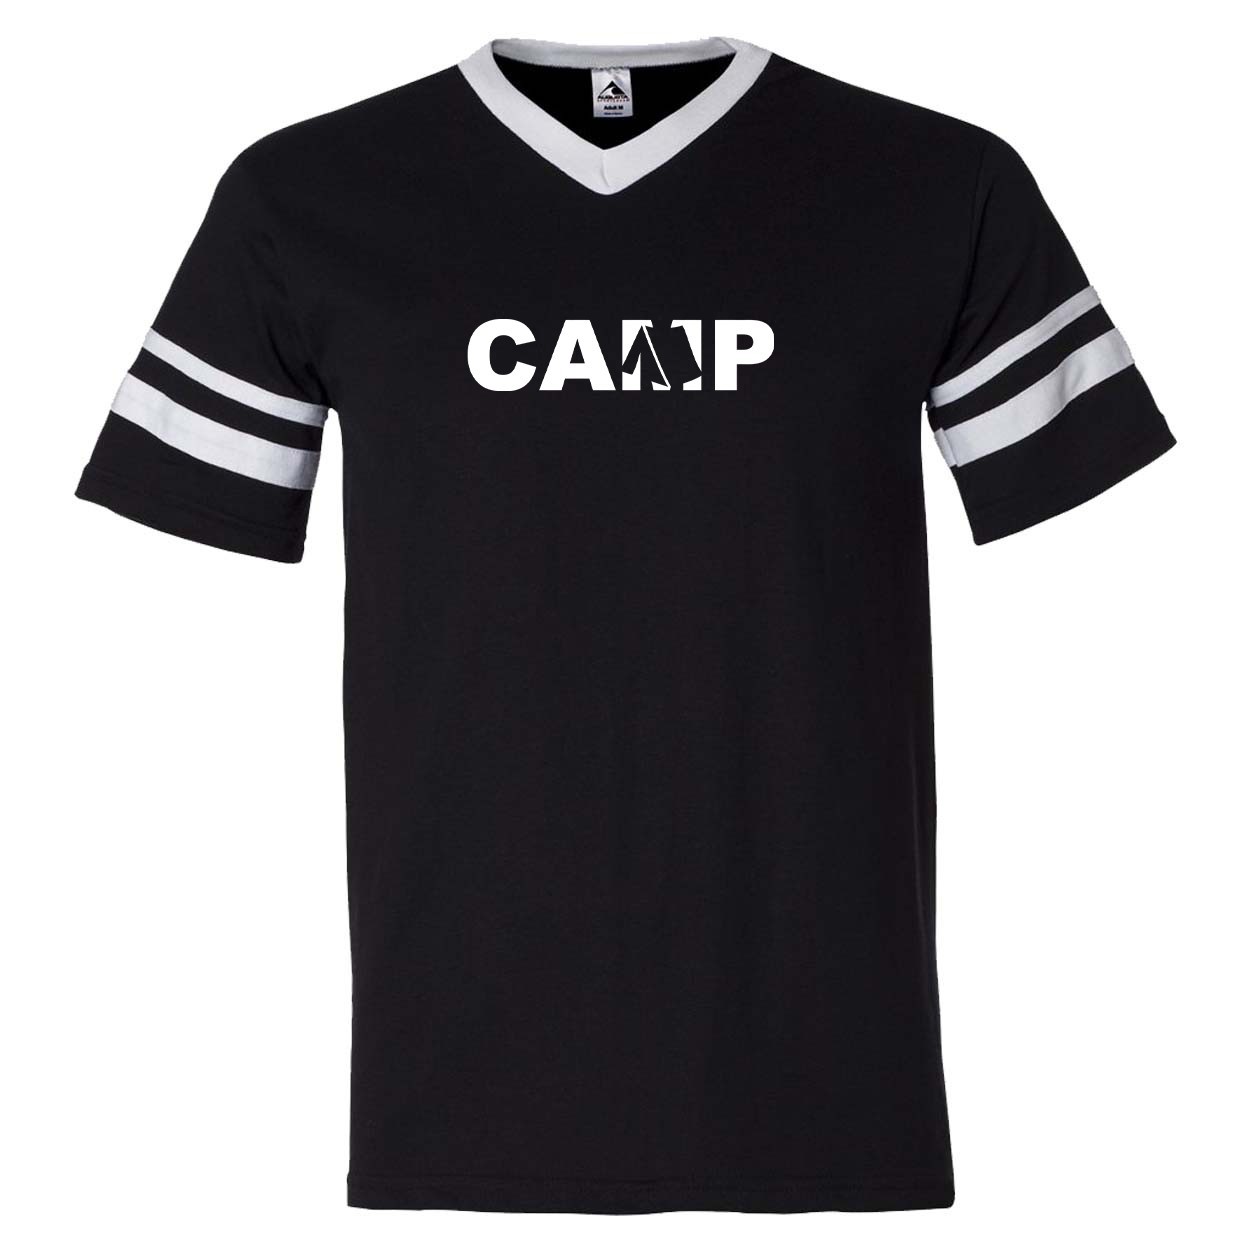 Camp Tent Logo Classic Premium Striped Jersey T-Shirt Black/White (White Logo)